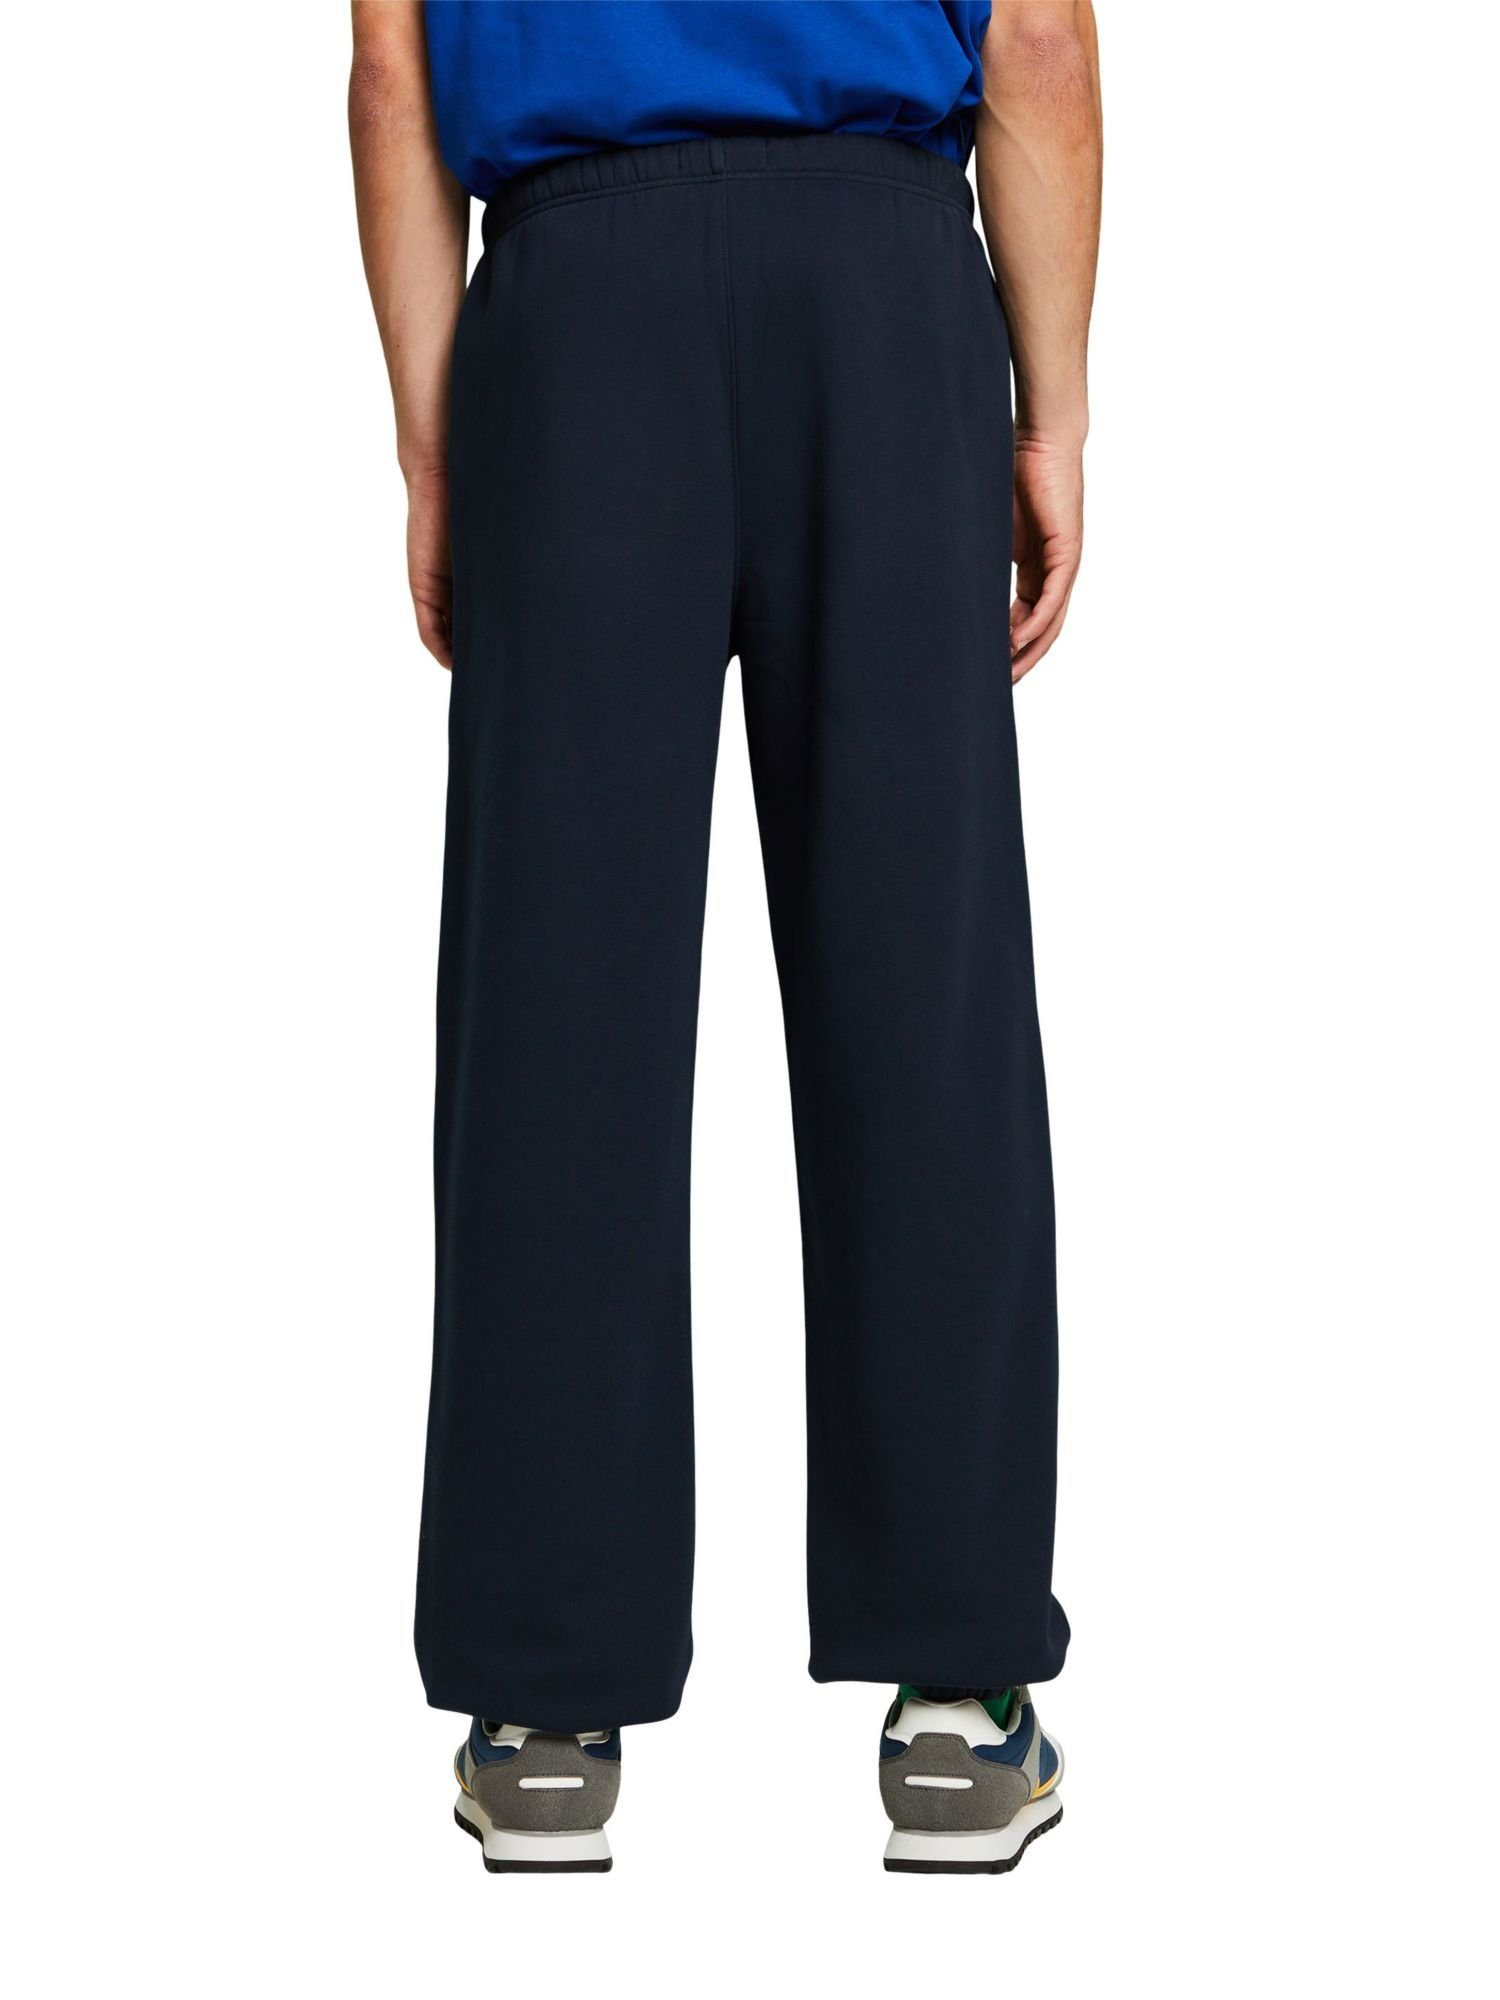 NAVY Jogginghose Esprit aus Logo-Sweatpants Baumwollfleece